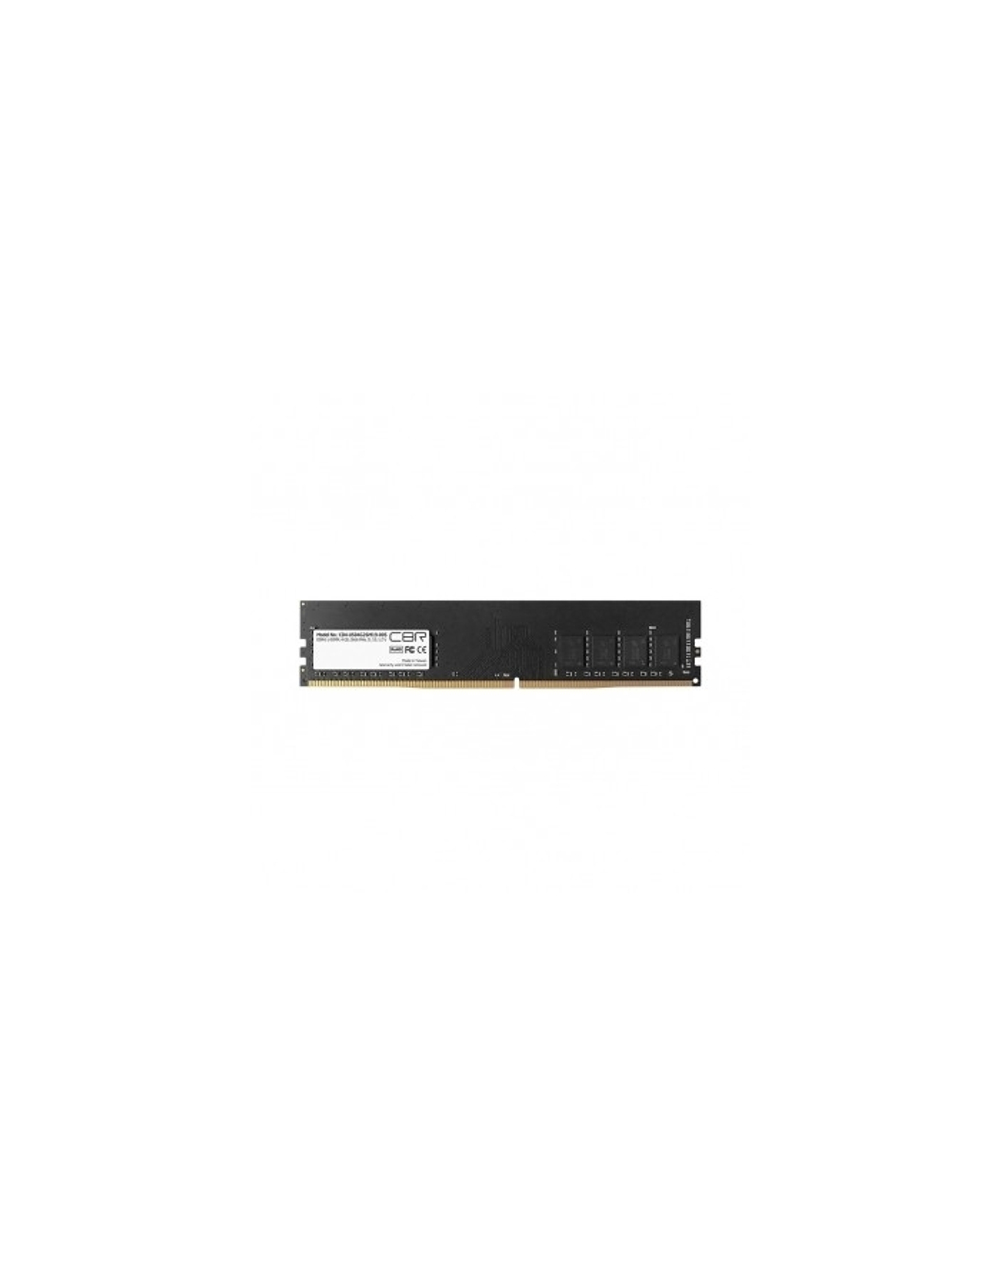 CBR DDR4 DIMM (UDIMM) 4GB CD4-US04G26M19-00S PC4-21300, 2666MHz, CL19, 1.2V, Micron SDRAM, single rank